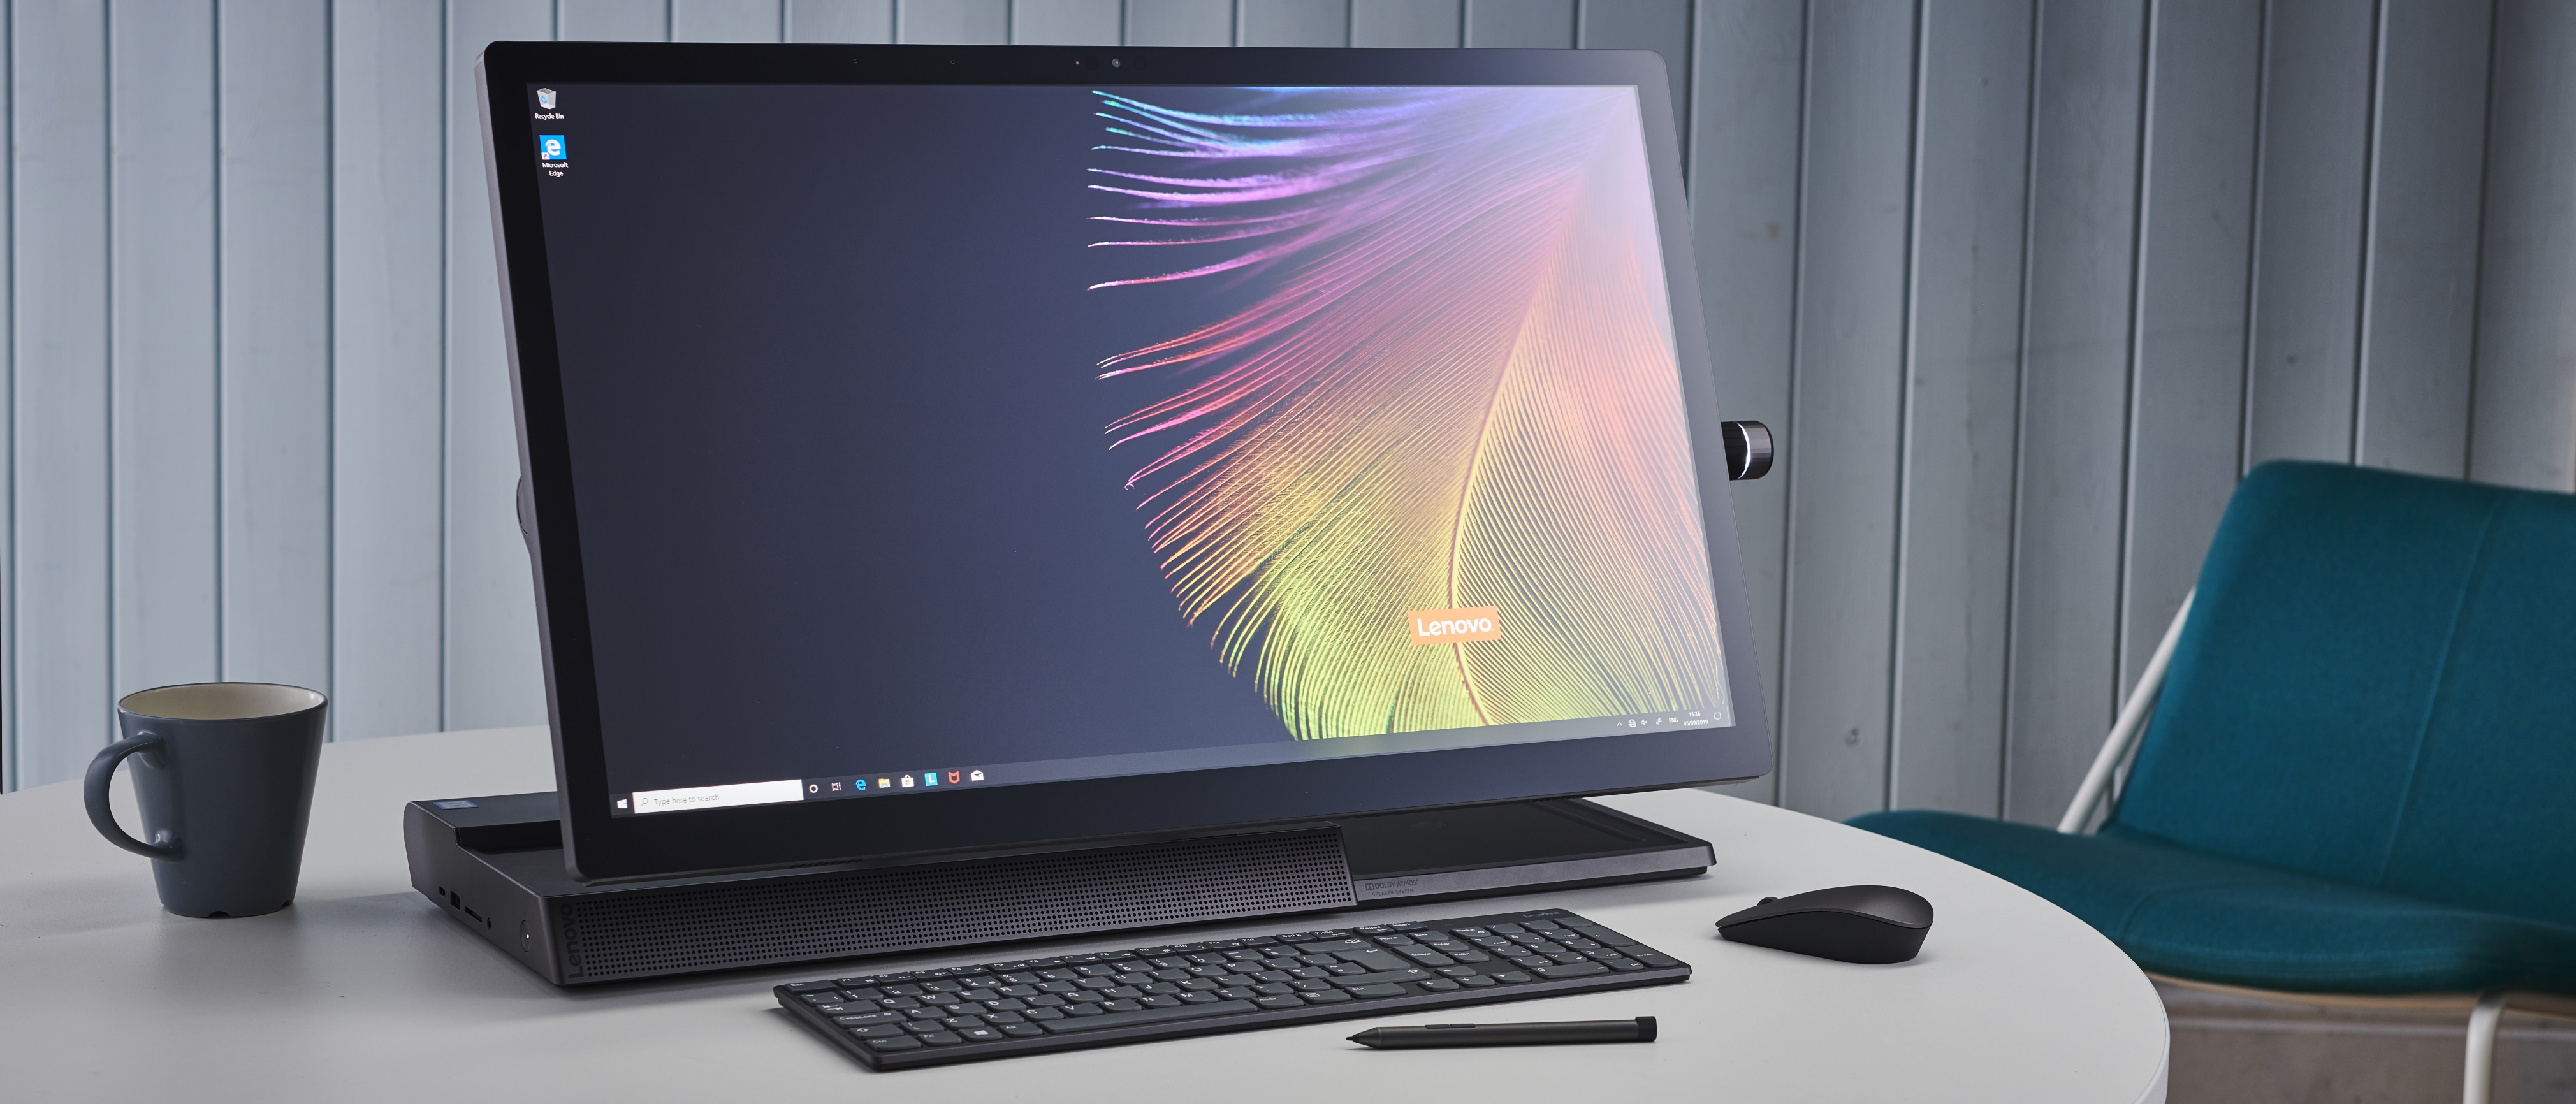 Lenovo Yoga A940 all-in-one computer review | TechRadar